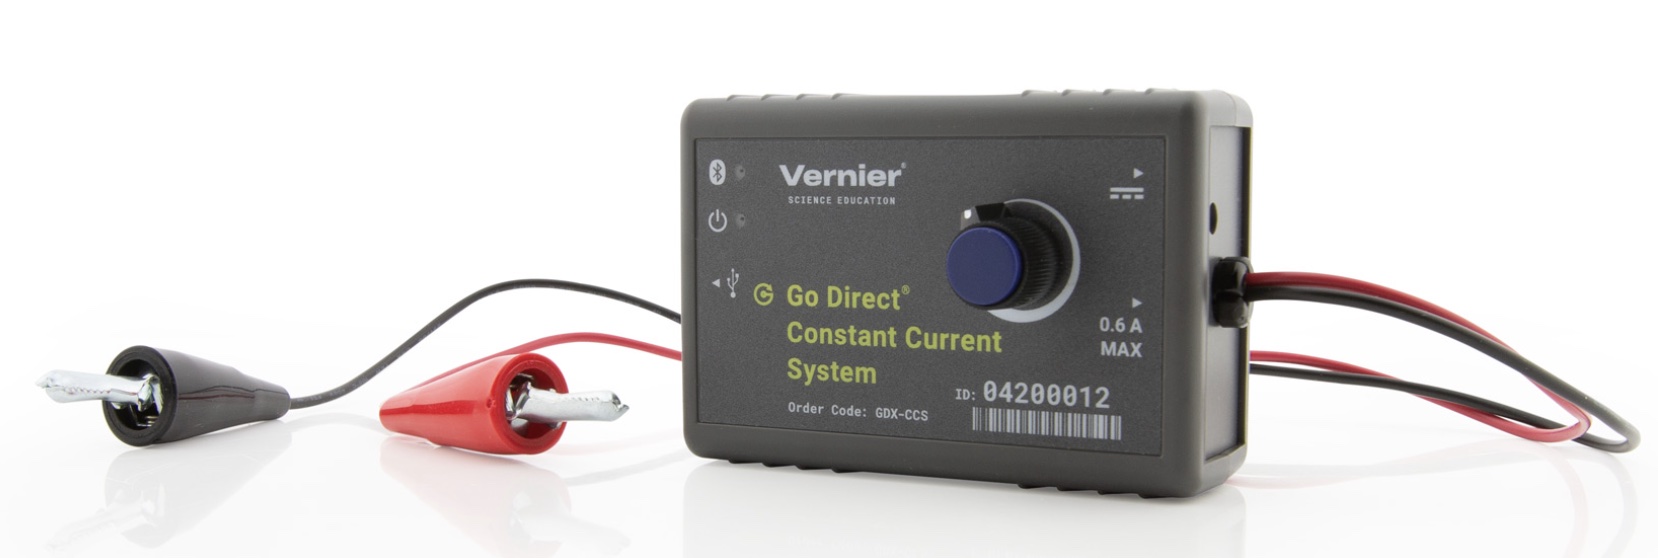 Vernier Constant Current Power Supply